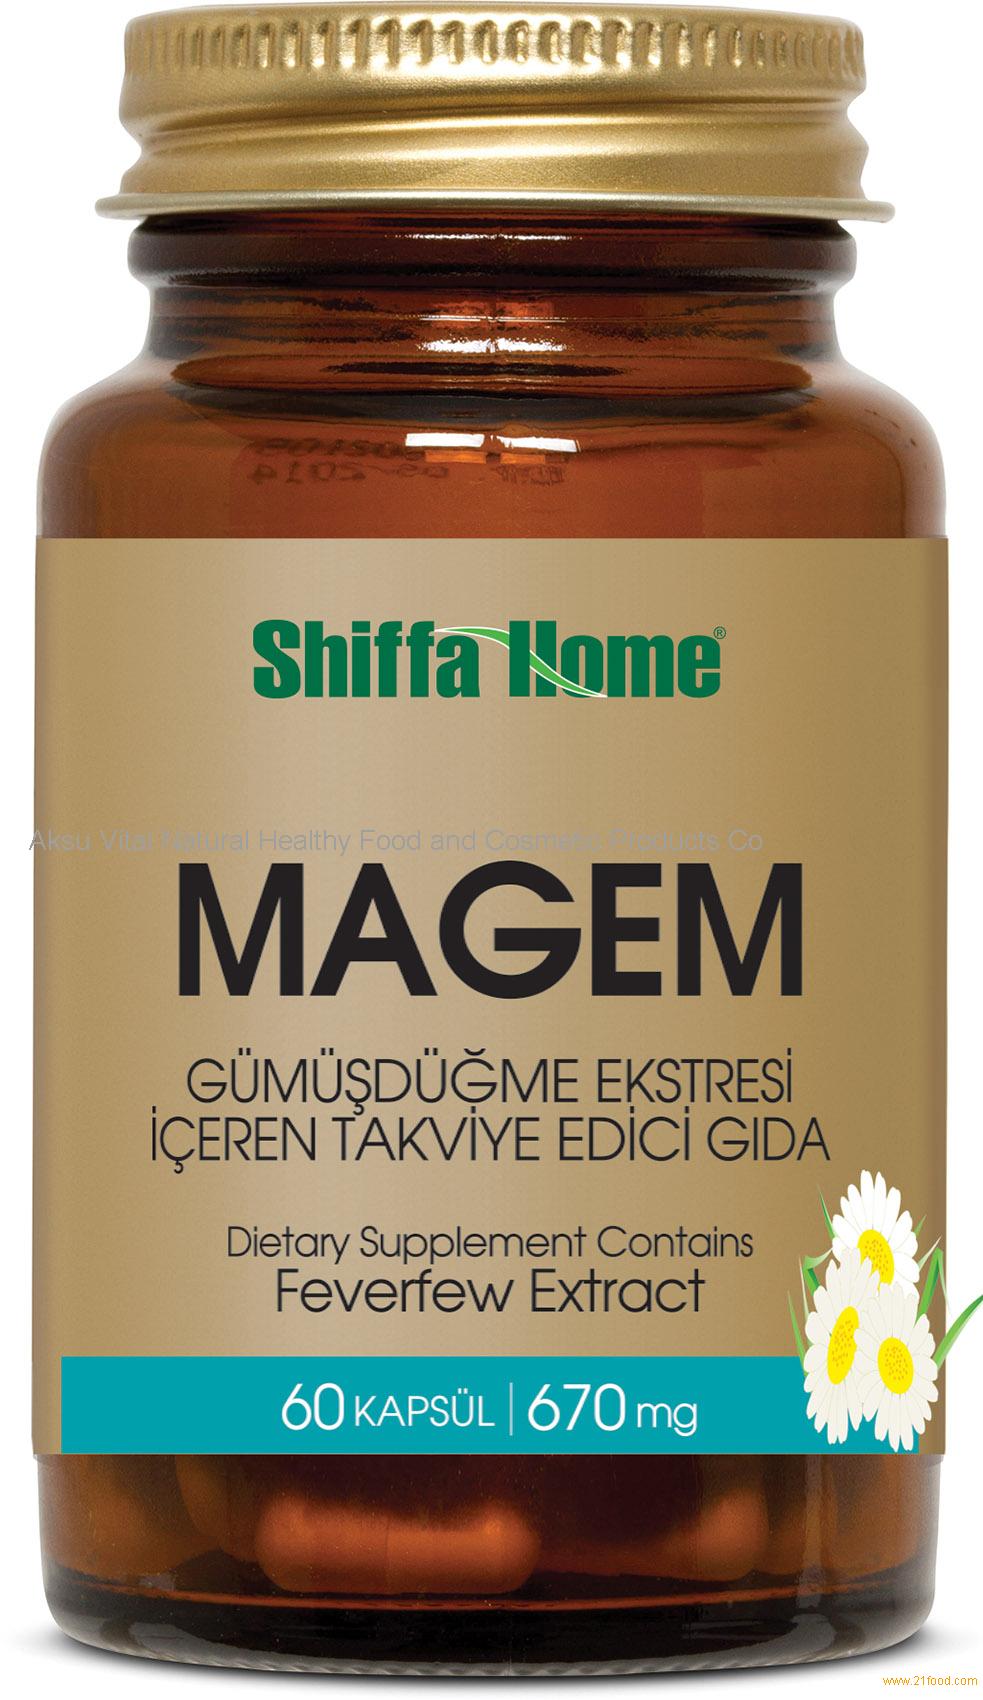 Feverfew extract Capsule Magem Capsule Dietary Supplement for Migraine